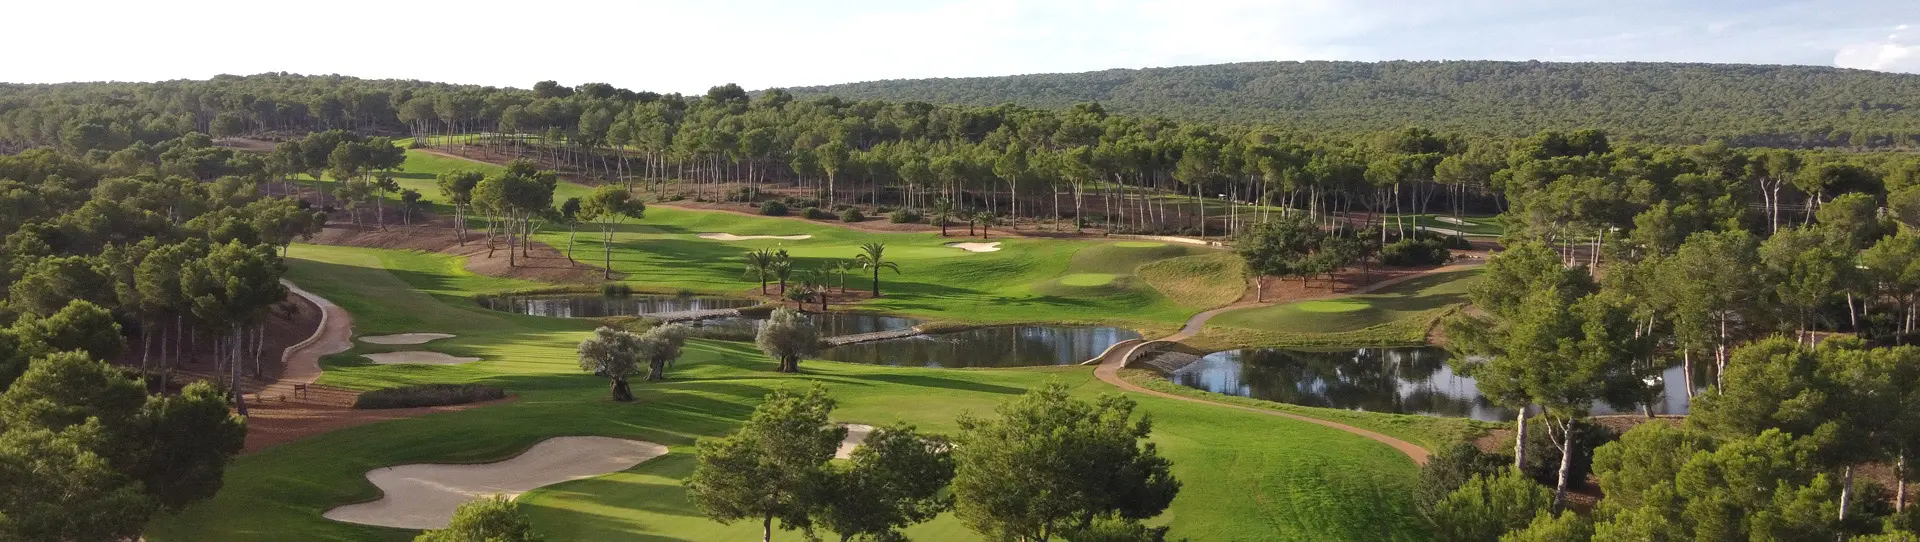 Spain golf courses - T-Golf Calvia (T-Golf Country Club) - Photo 2